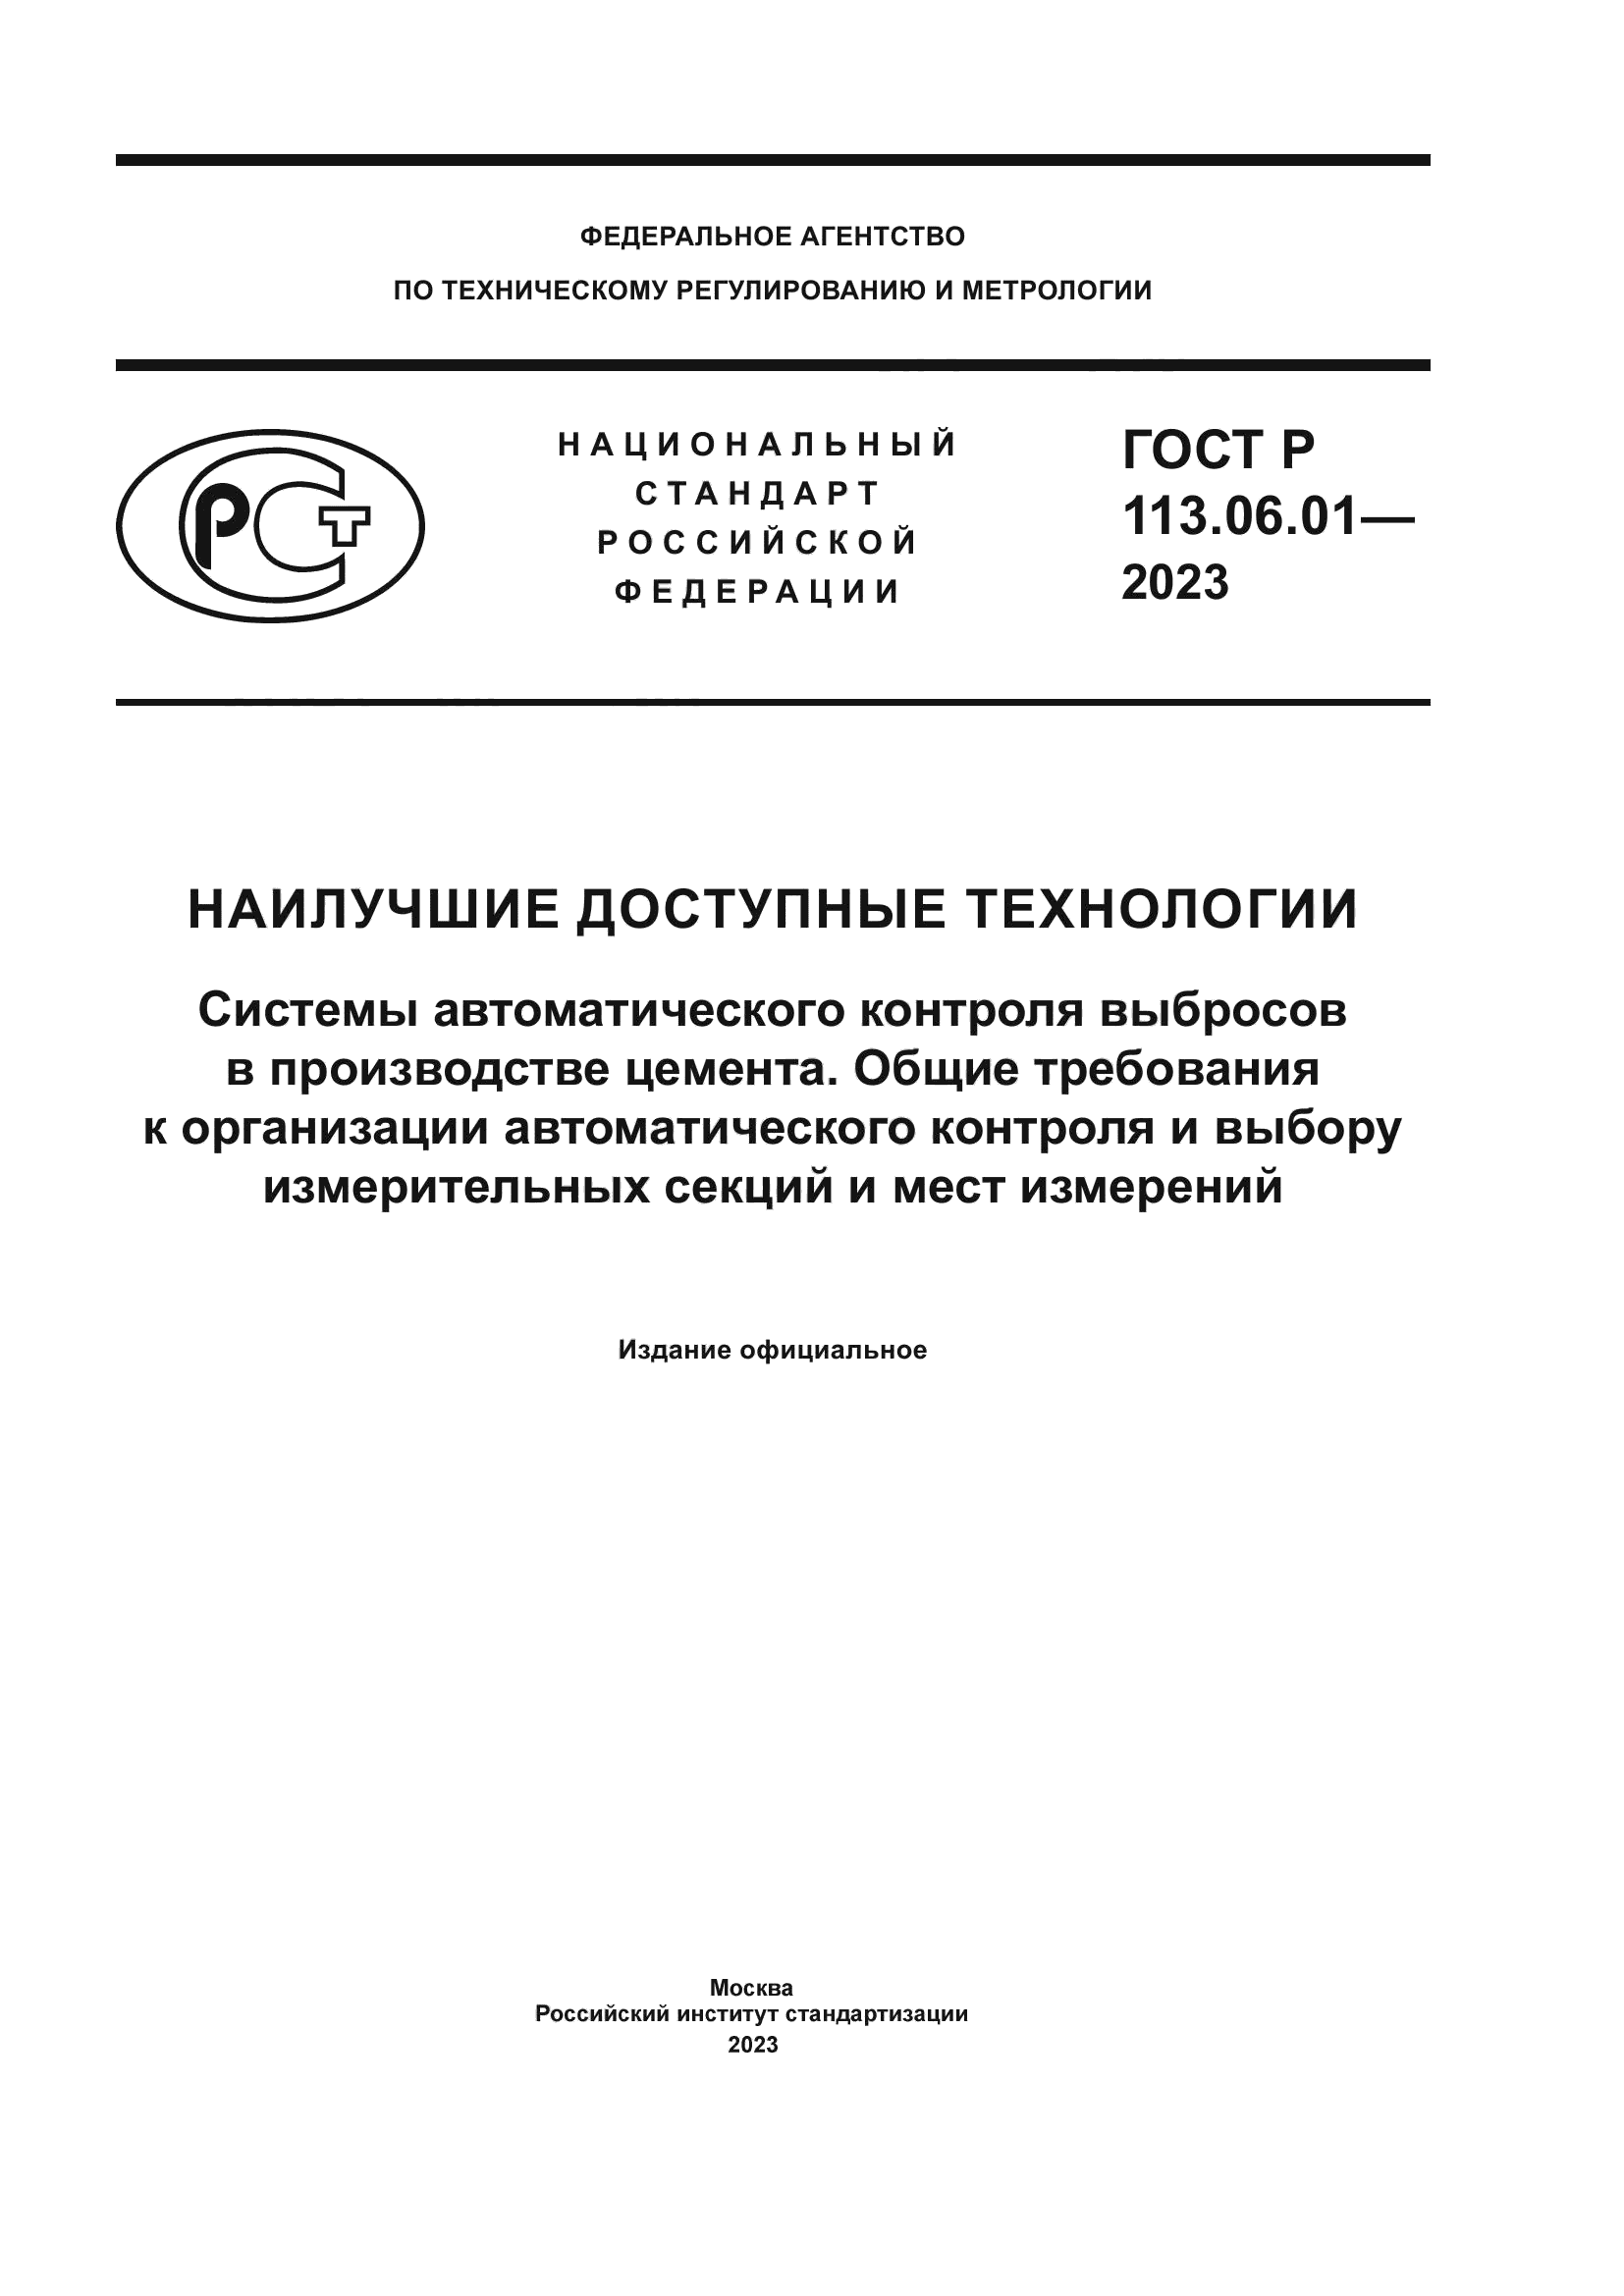 ГОСТ Р 113.06.01-2023